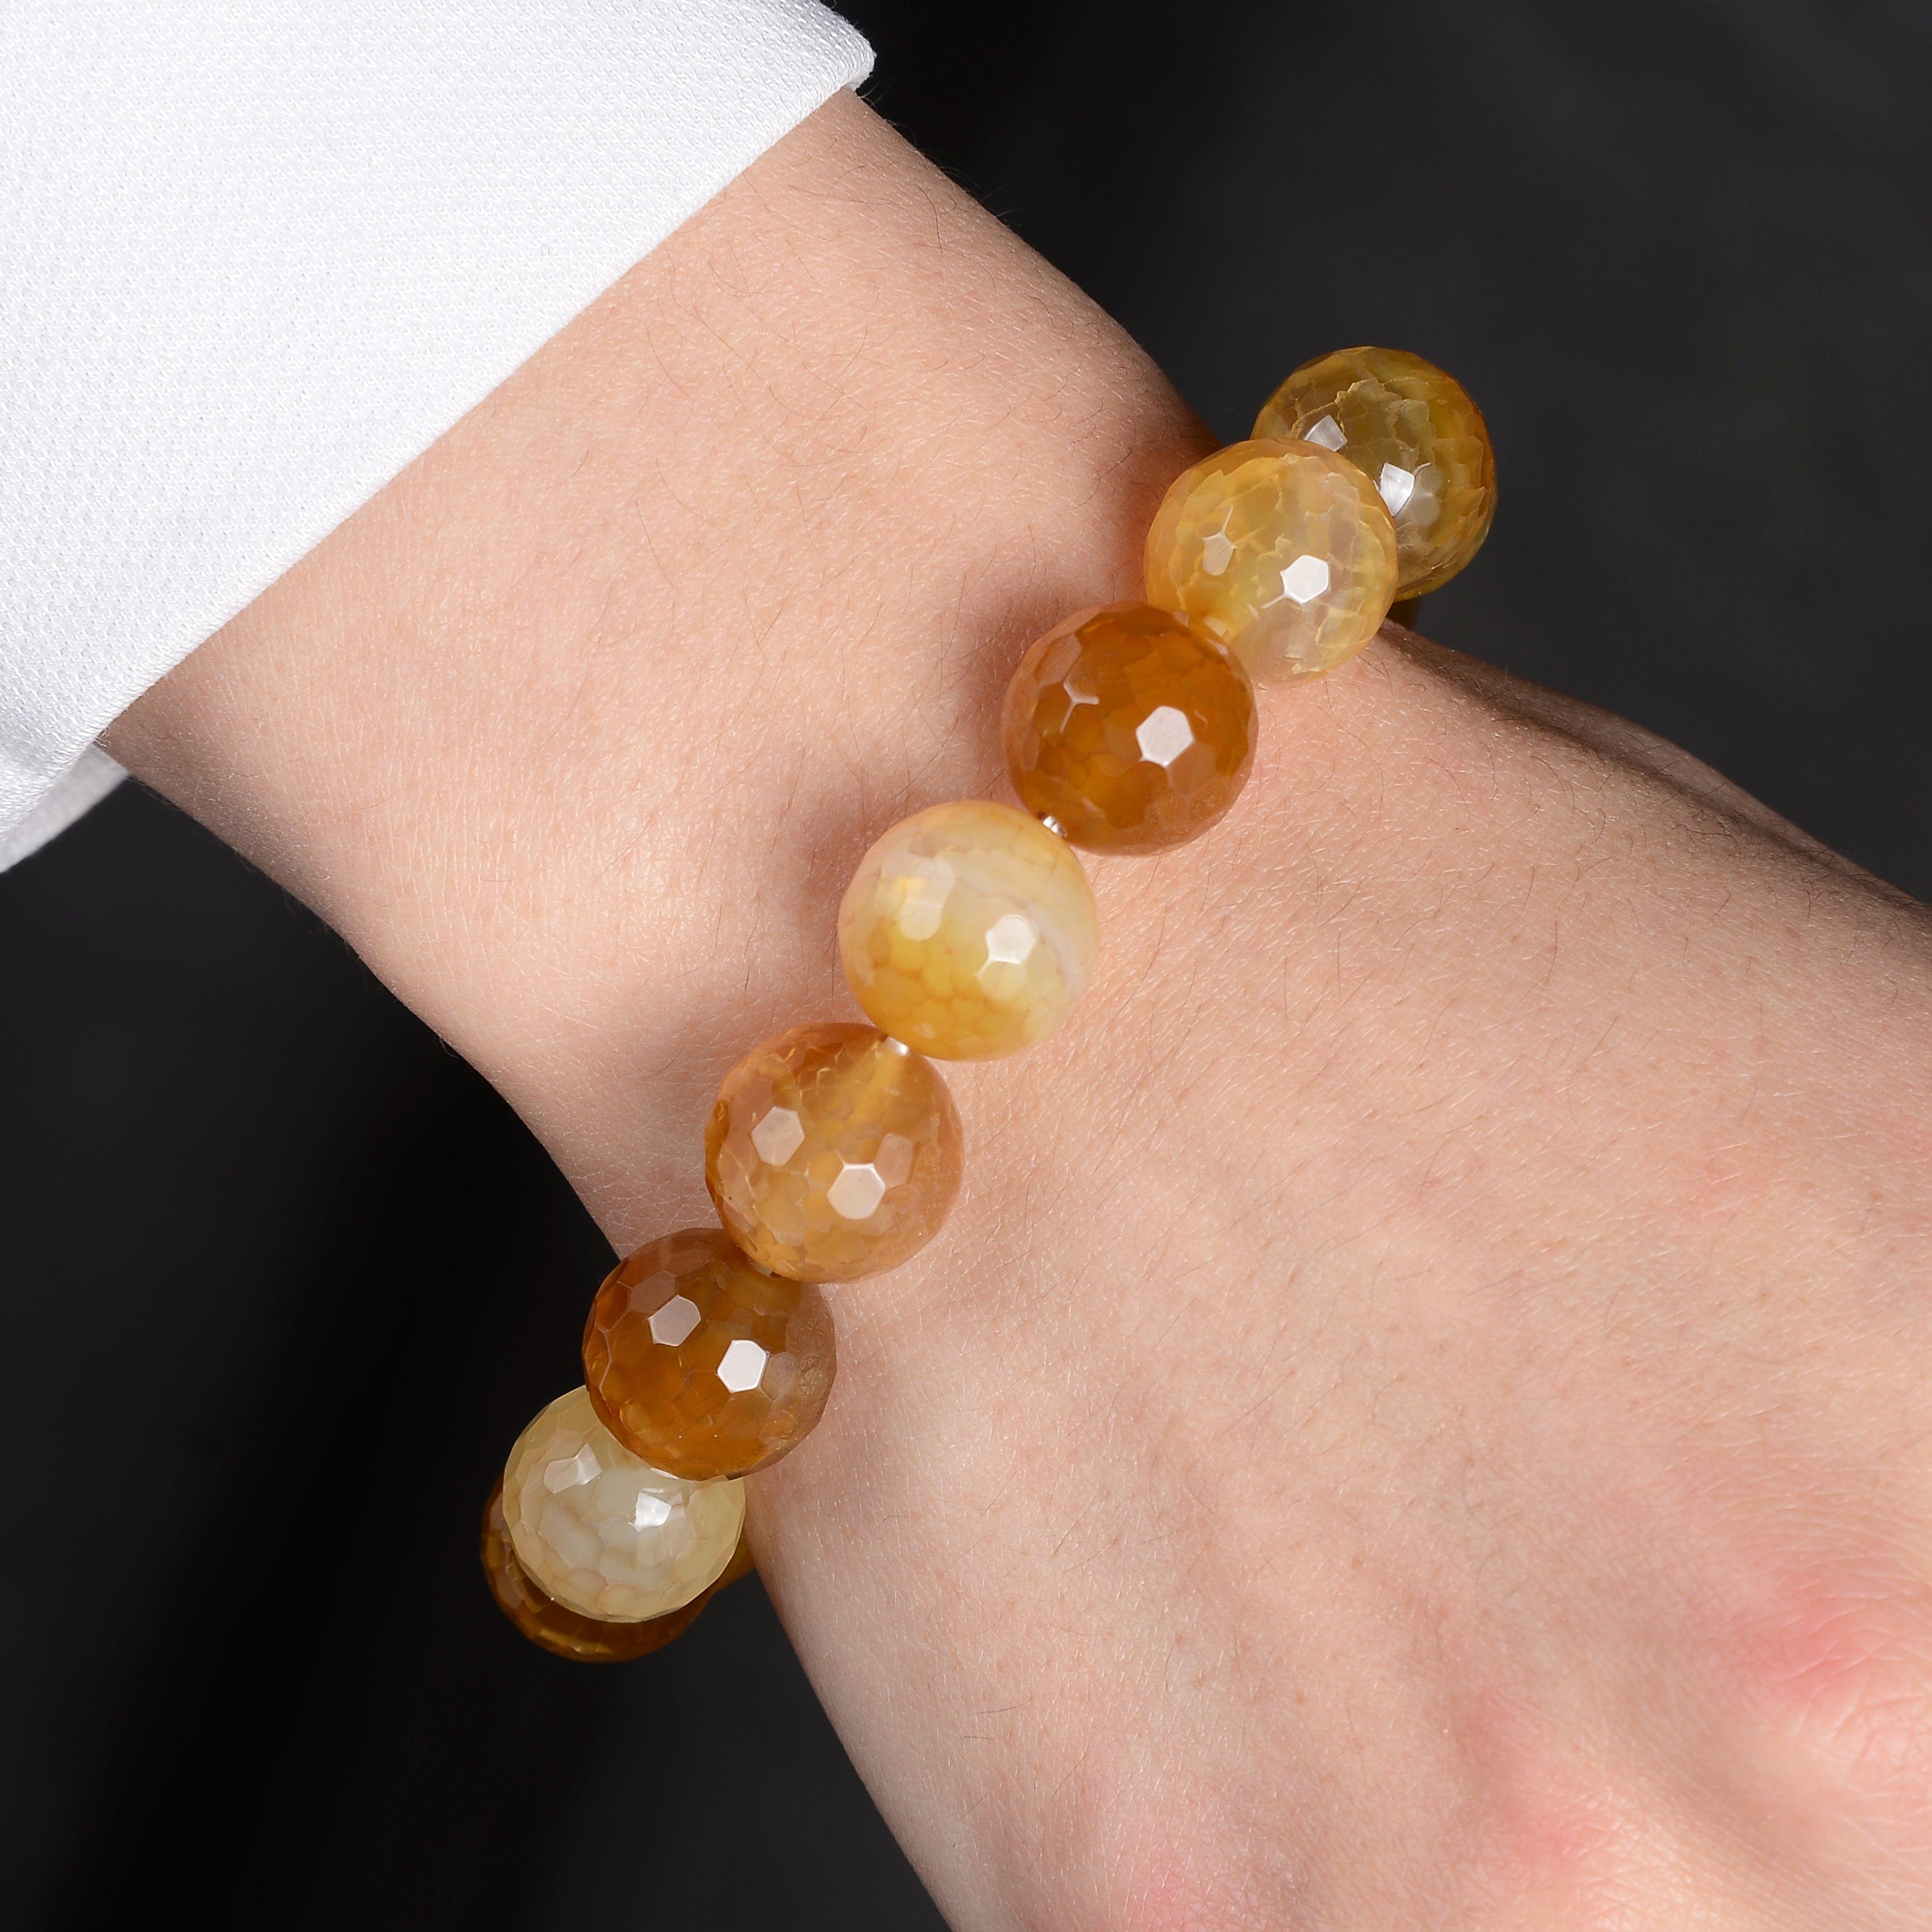 Kalifano Gemstone Bracelets Yellow Agate Faceted Natural Gemstone Bead Elastic Bracelet PLAT-BGP-032